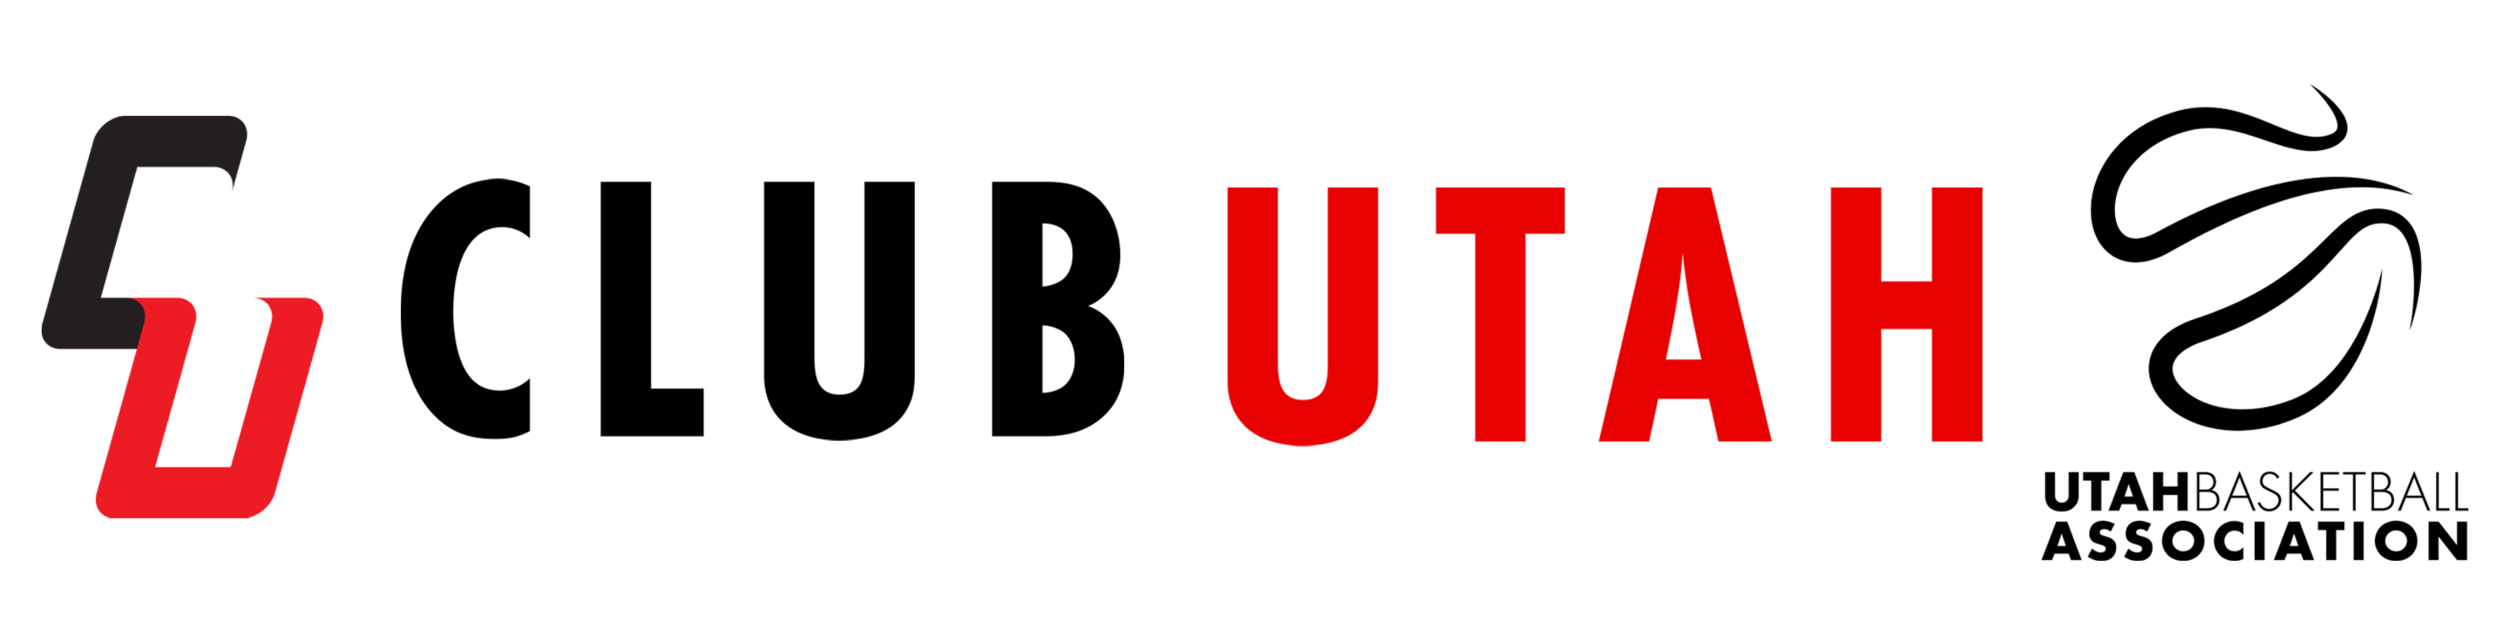 Utah's Top Youth Club Organization